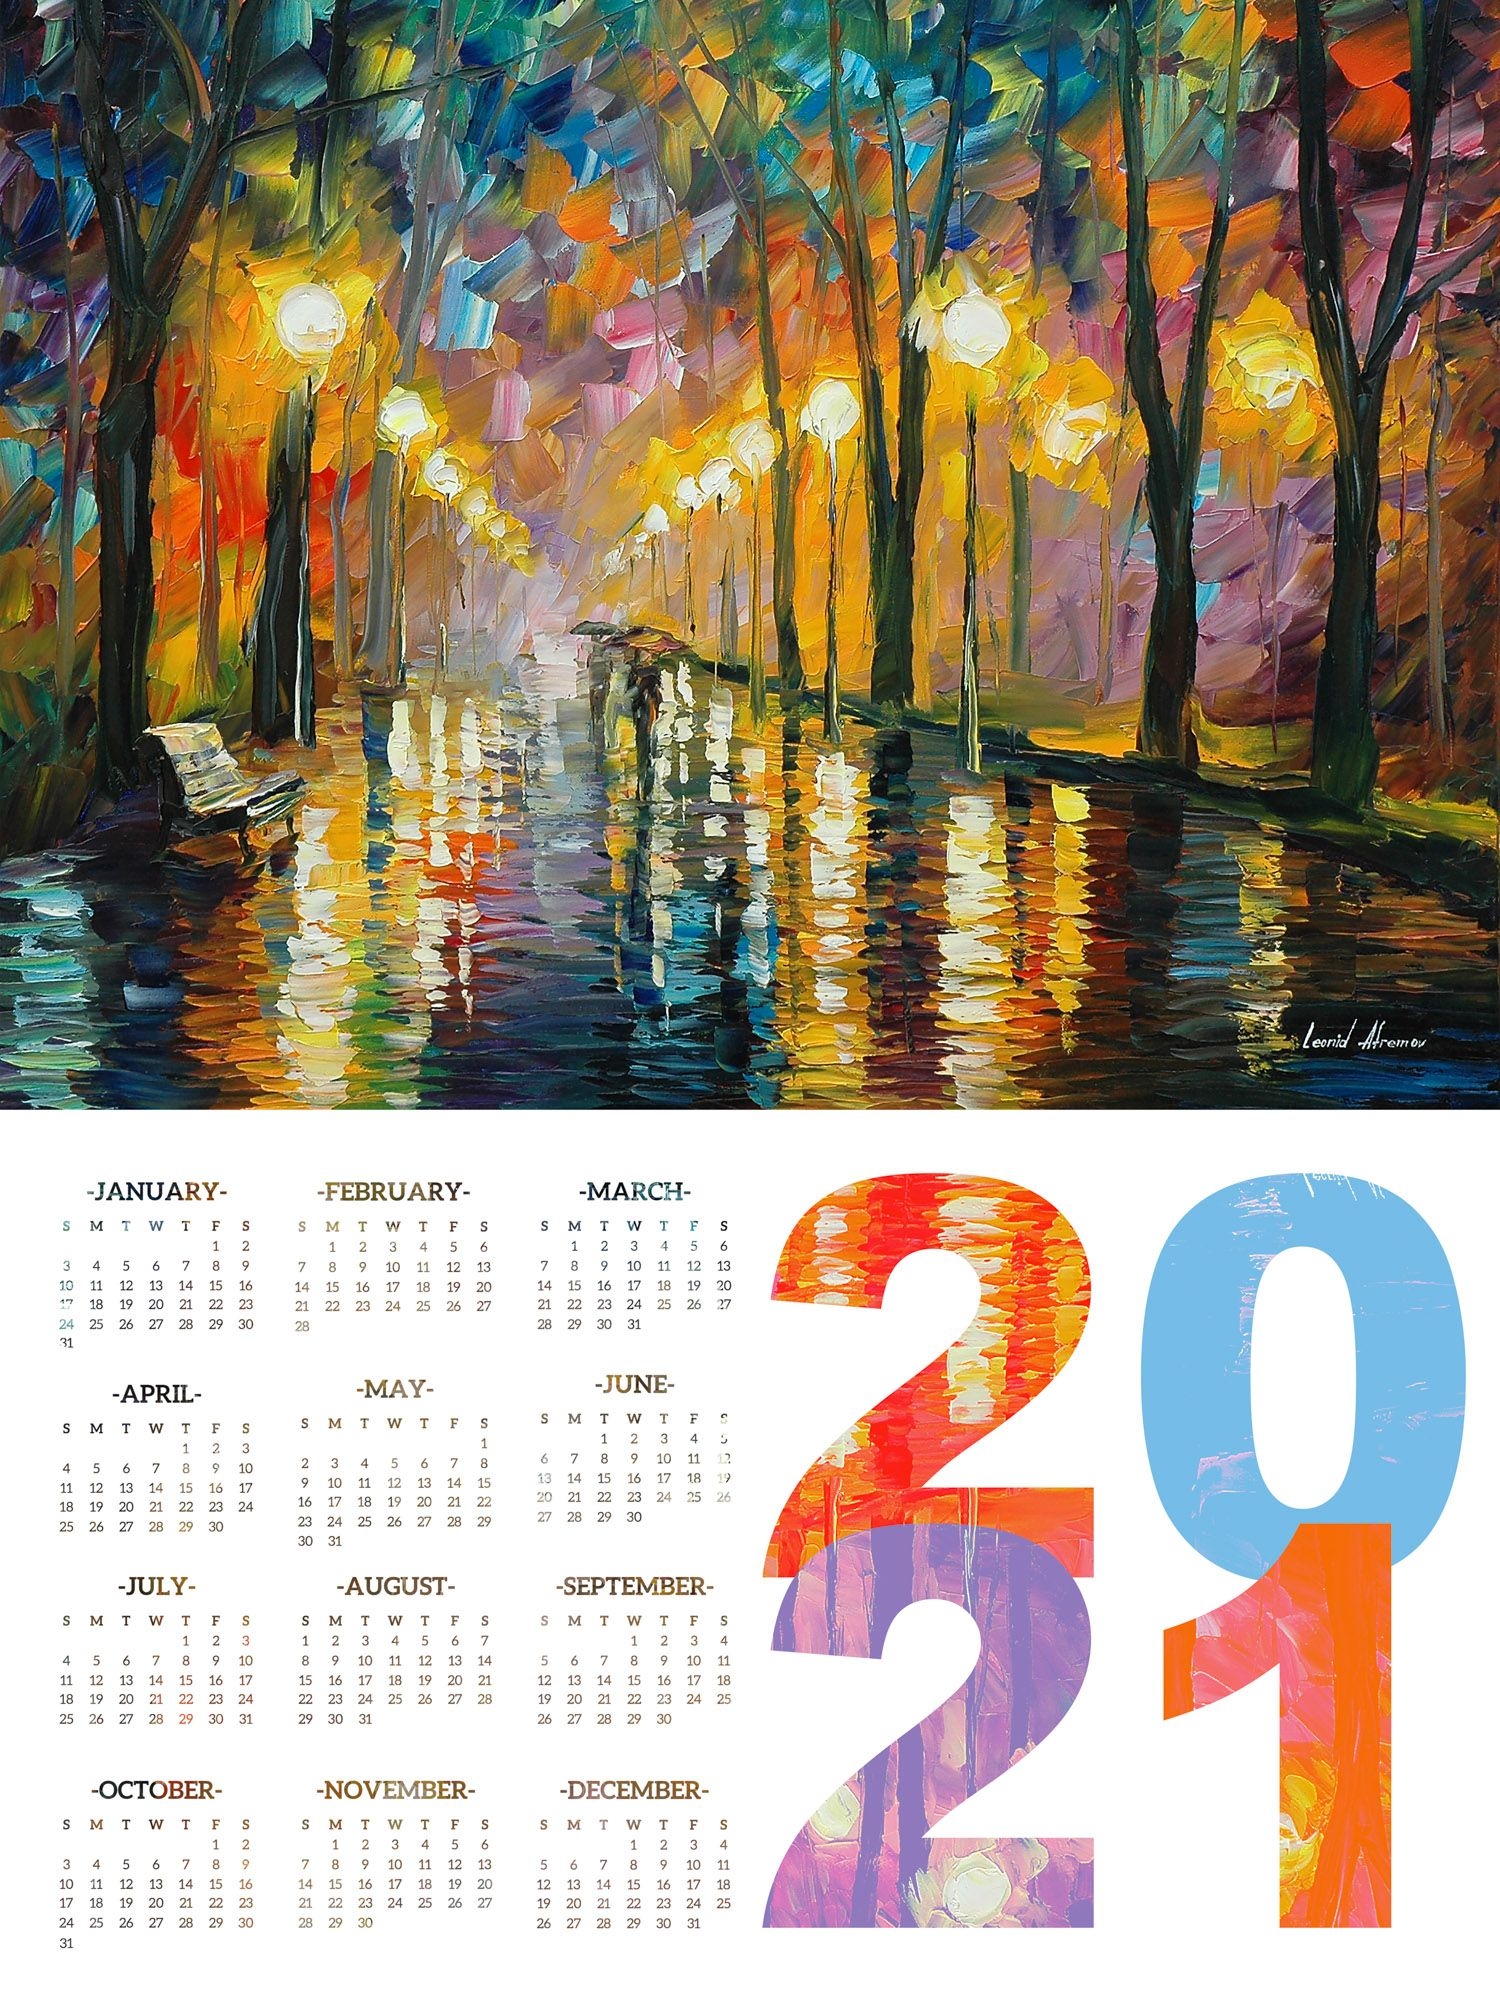 Calendar 2021 - Print On High Quality Artistic Canvas